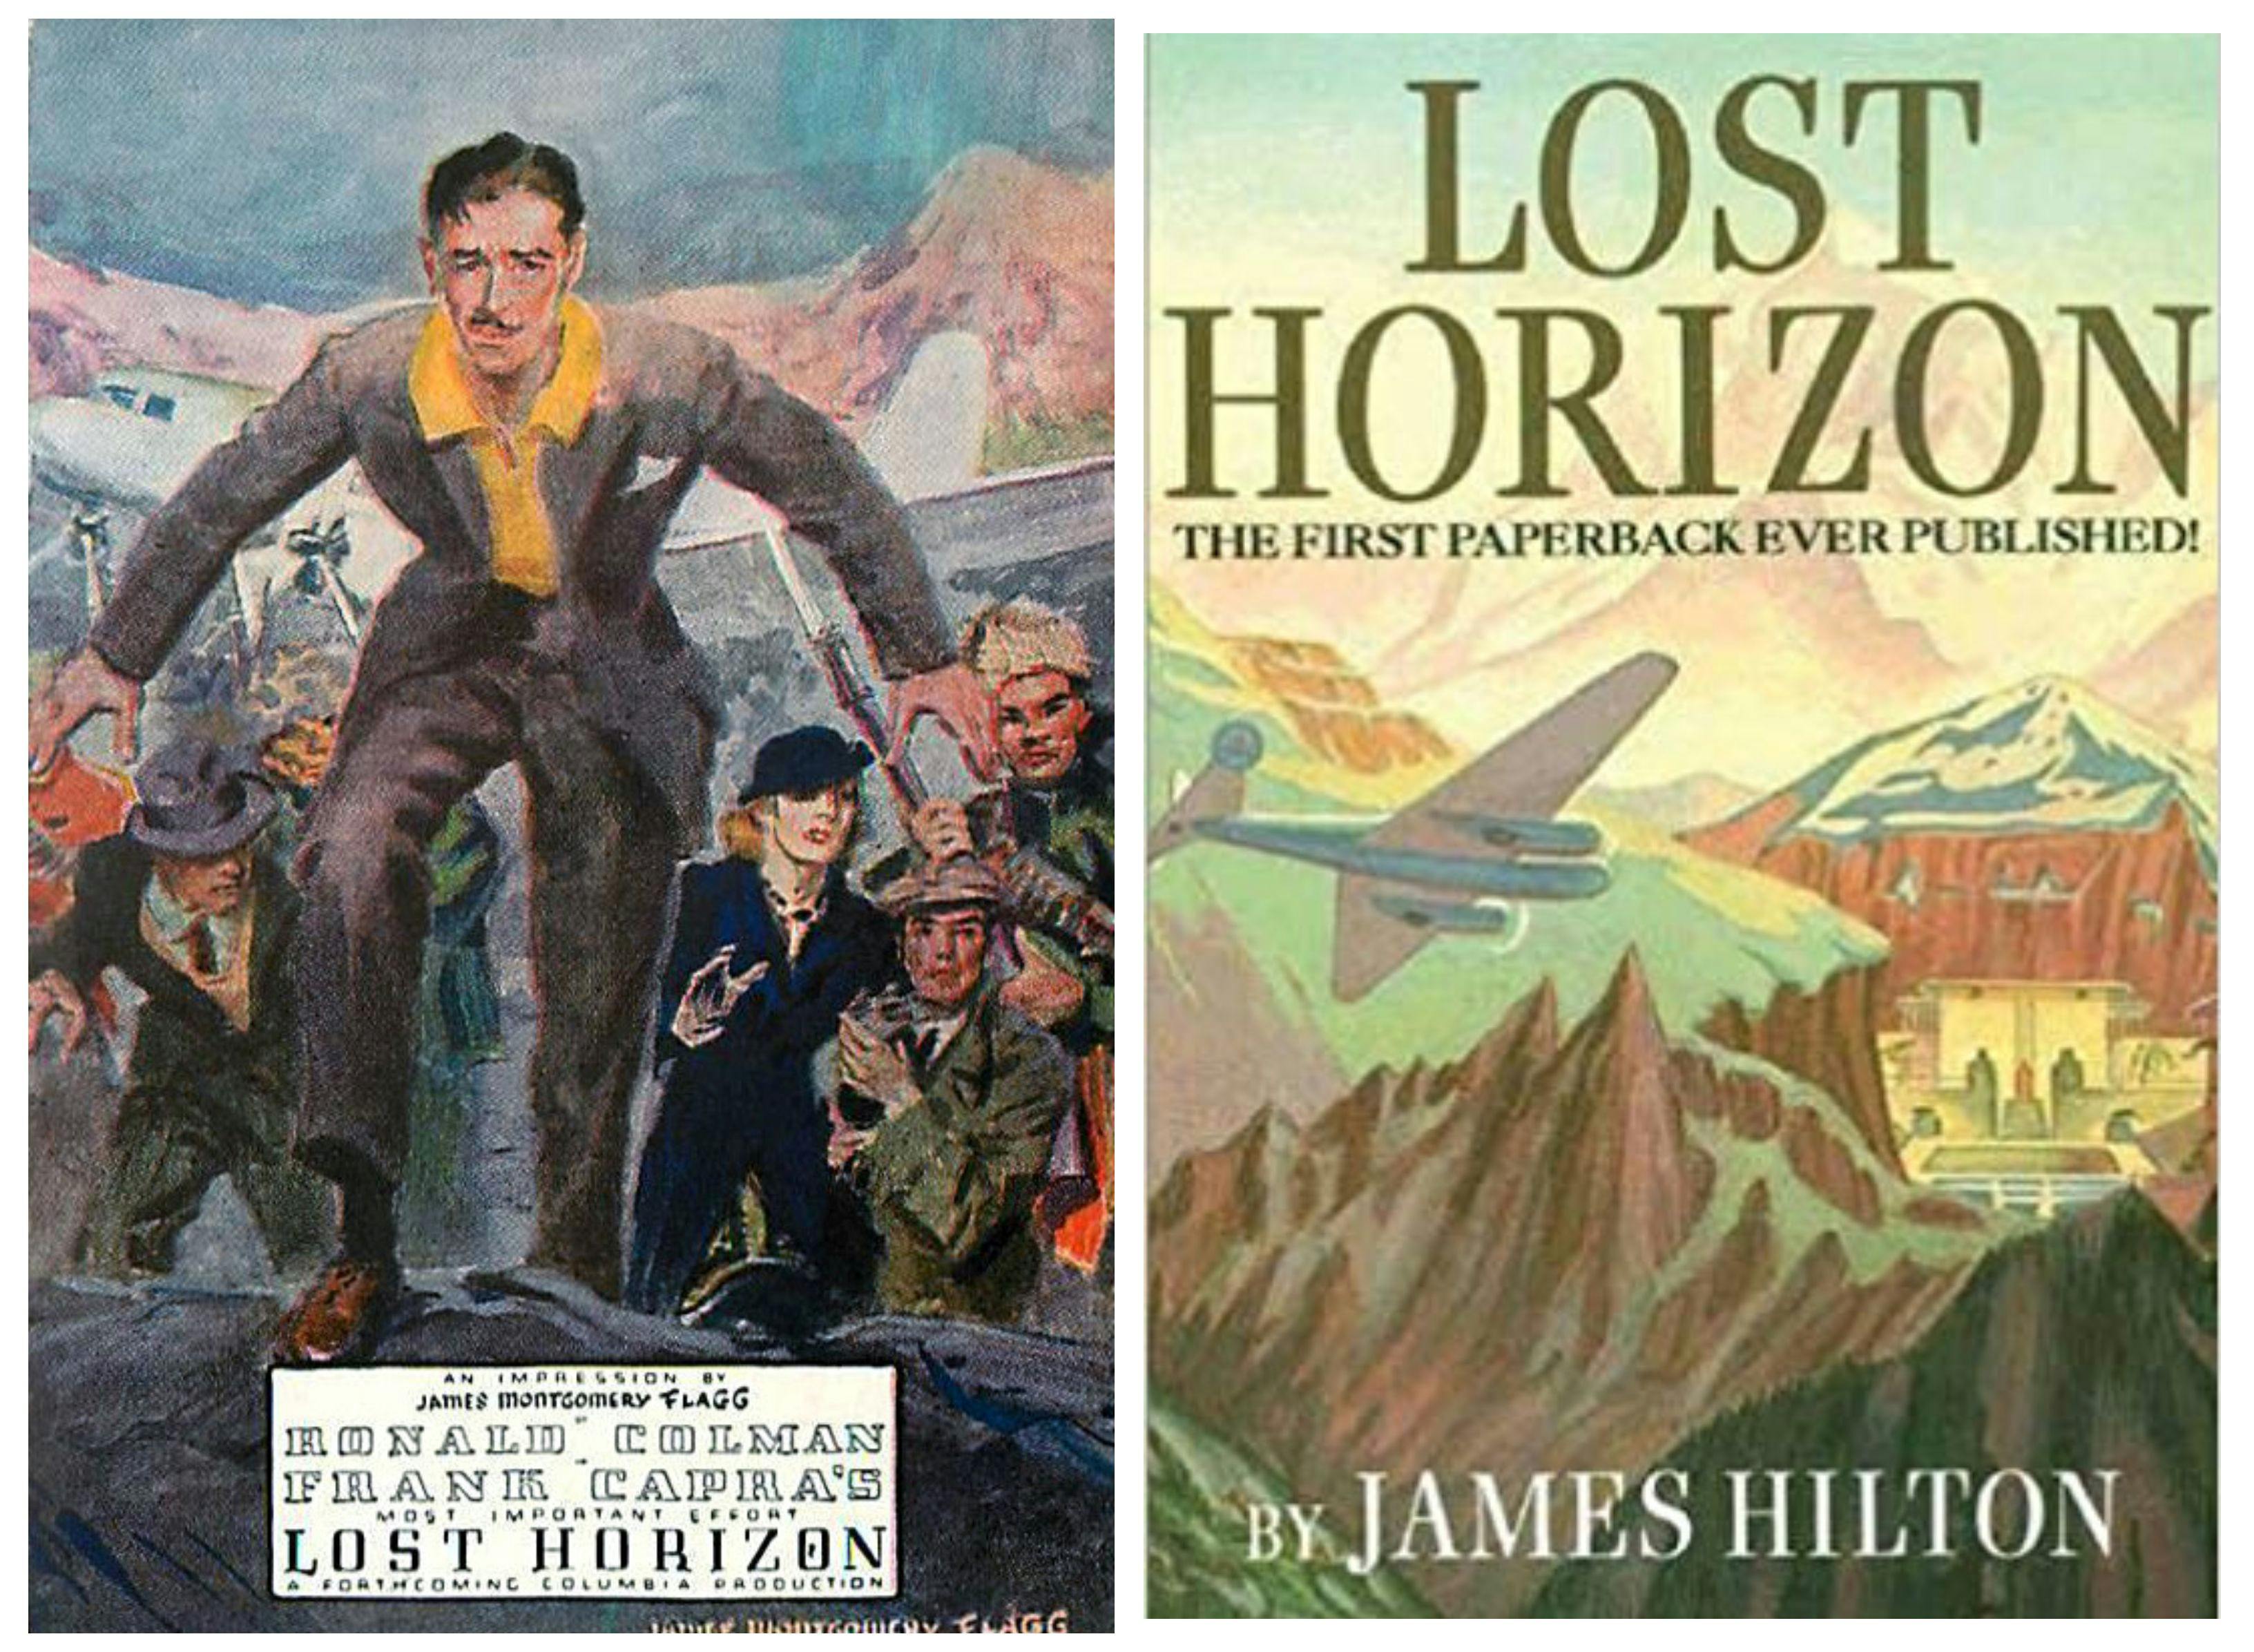 Lost Horizon movie (1937) and book (1933)